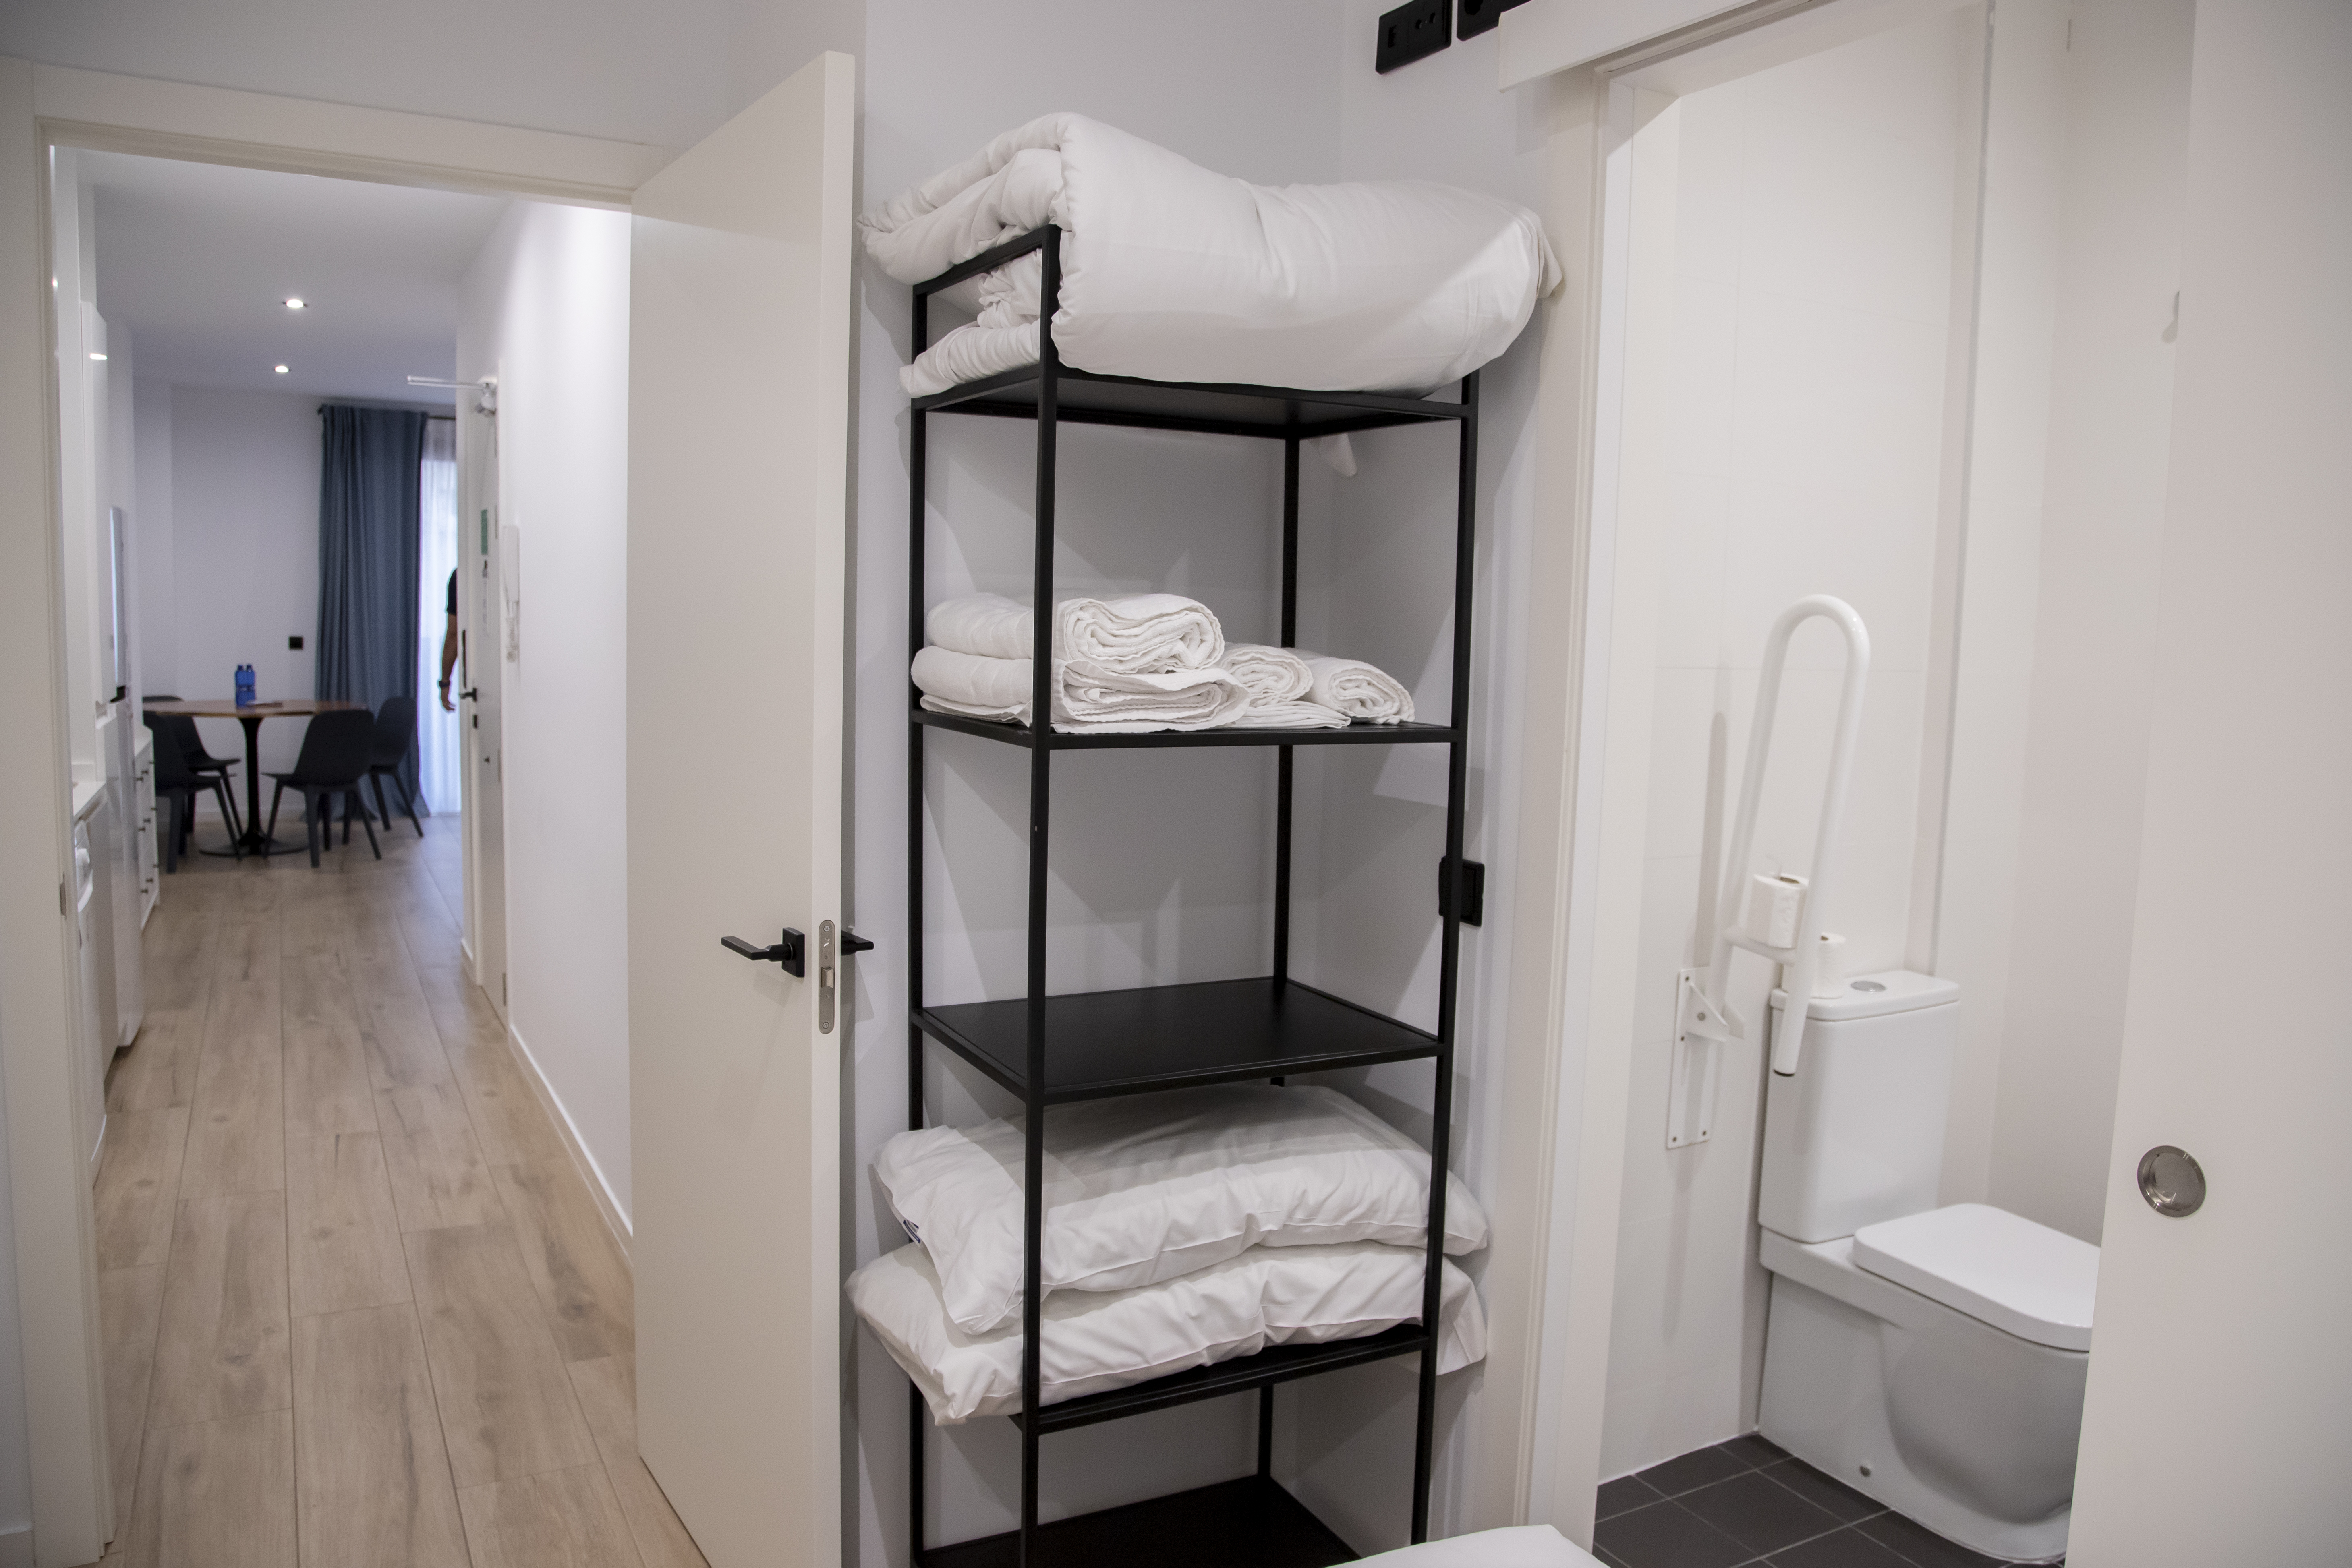 2T one bedroom apartment in the heart of the city 56 VLC HOST: Alquiler apartamentos corta duración